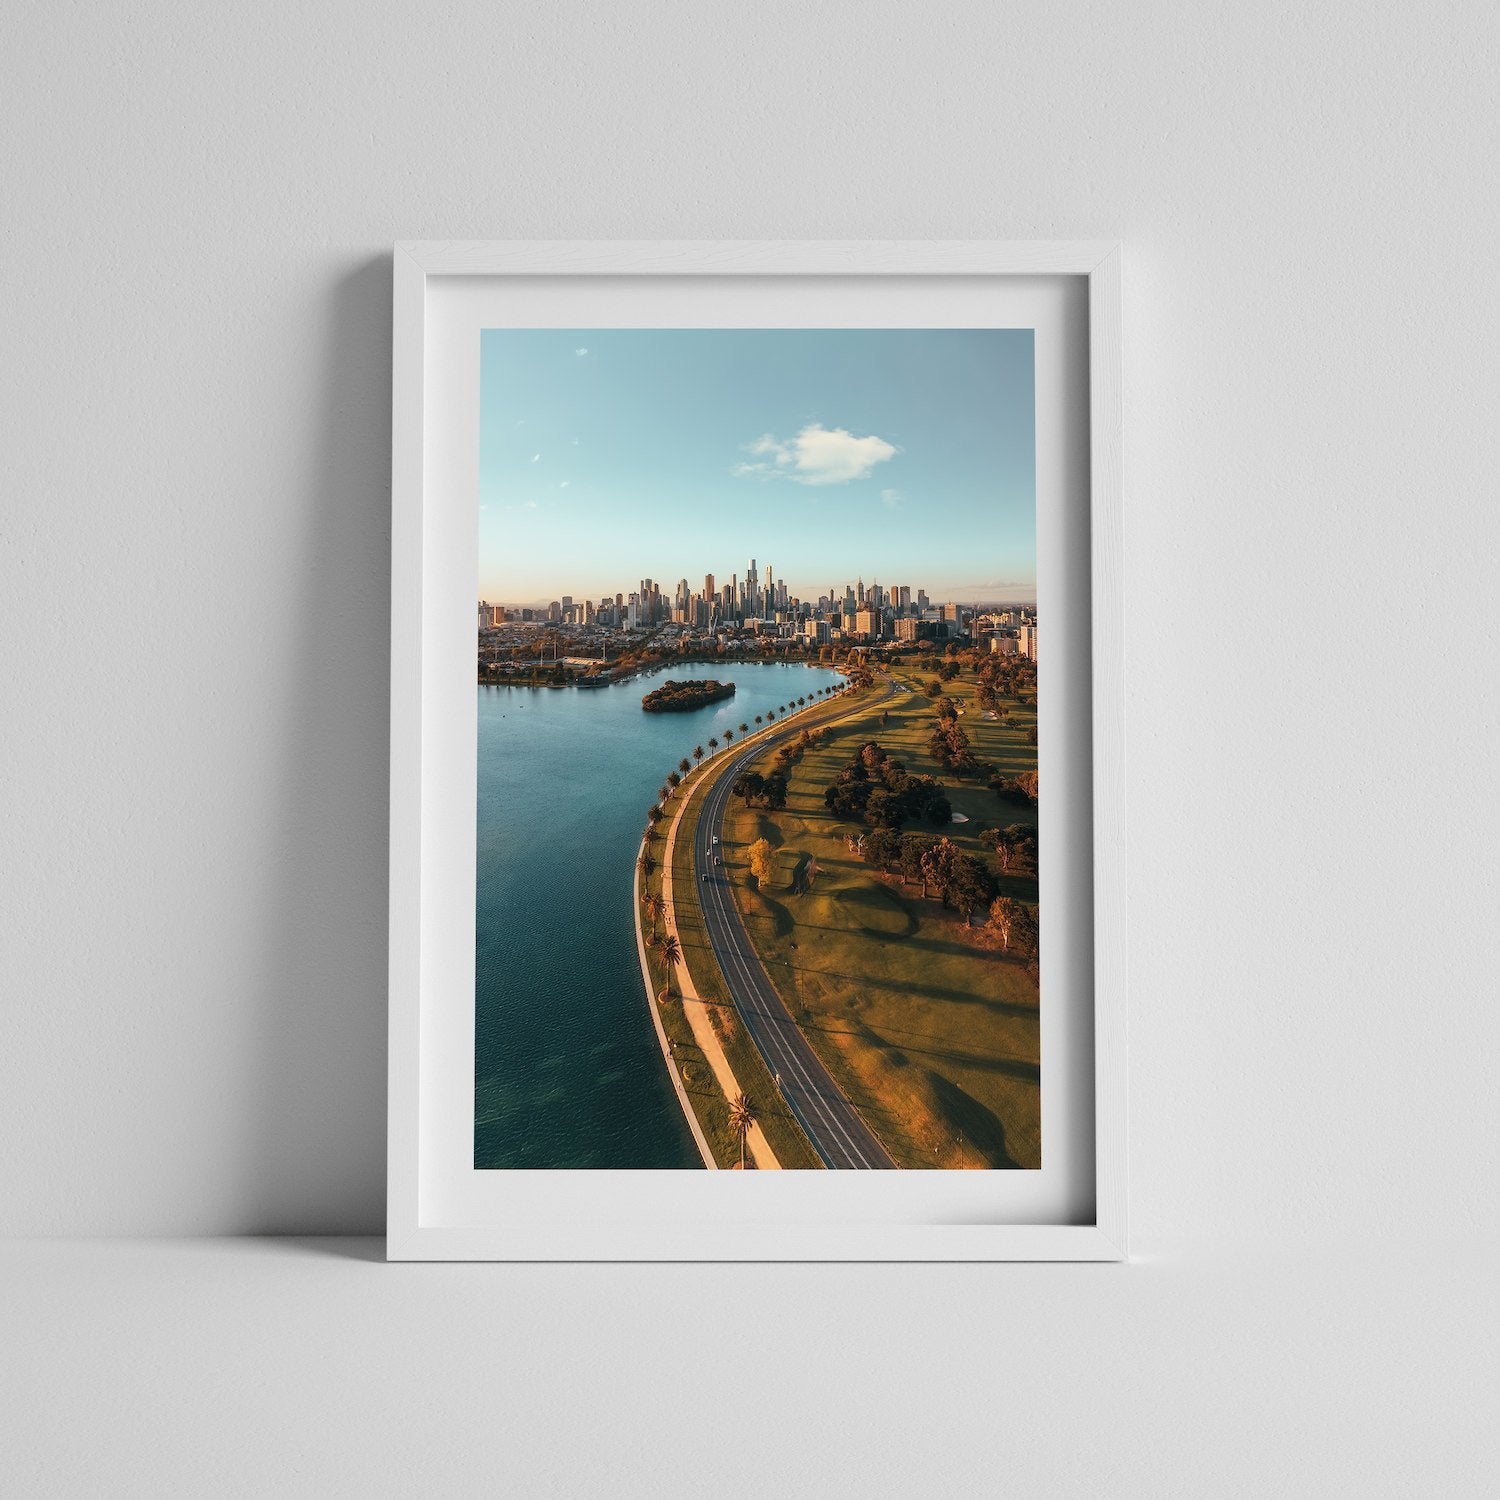 Albert Park F1 Circuit Melbourne Sunset | Premium Framed Print - Peter Yan Studio